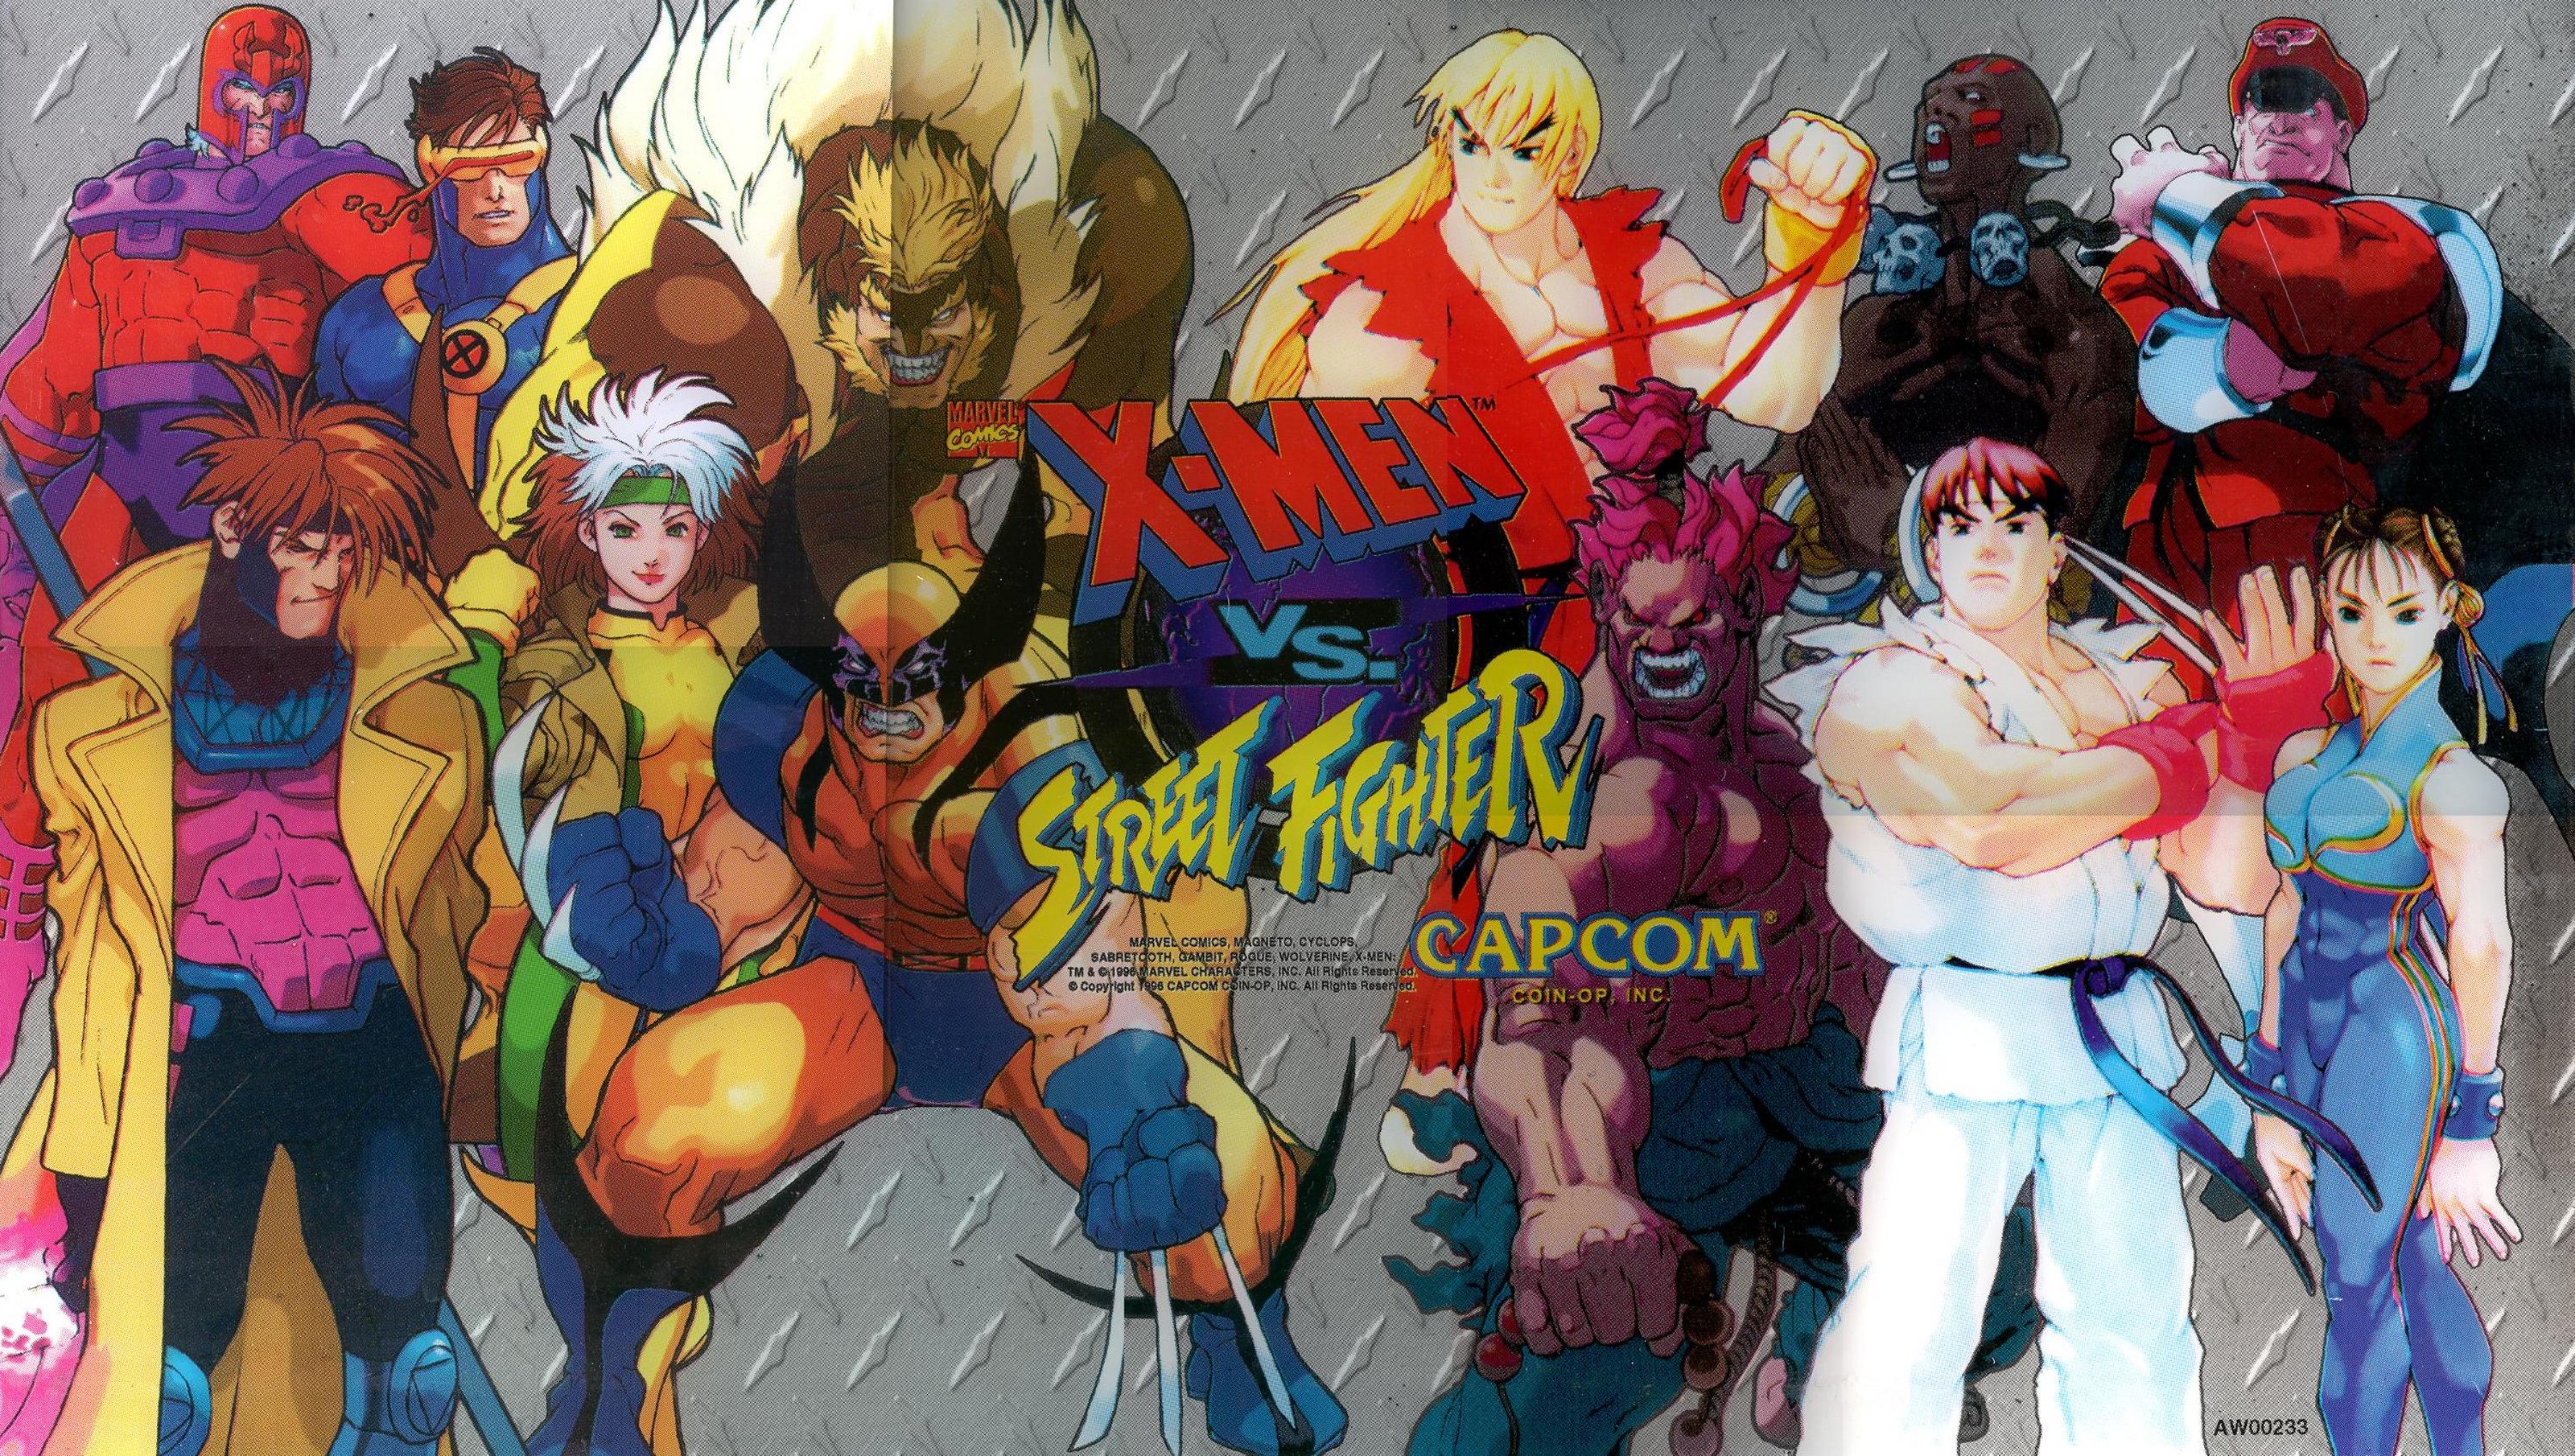 X-Men vs. Street Fighter.